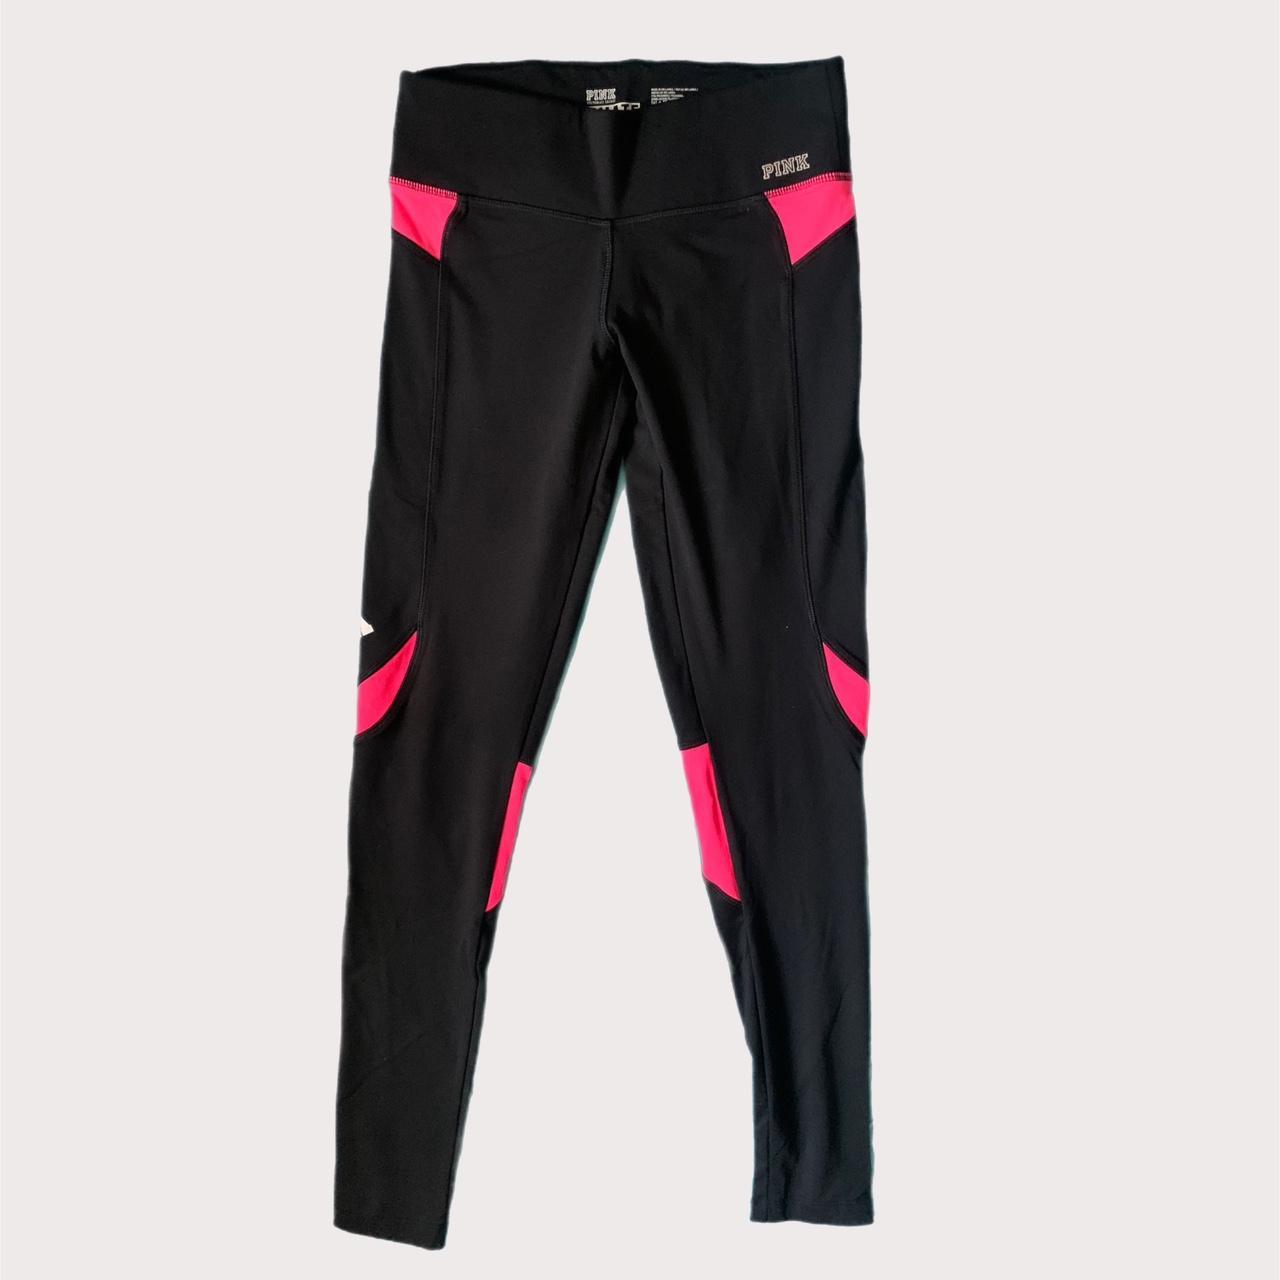 Black & Pink Yoga Leggings Brand: Victoria's Secret - Depop